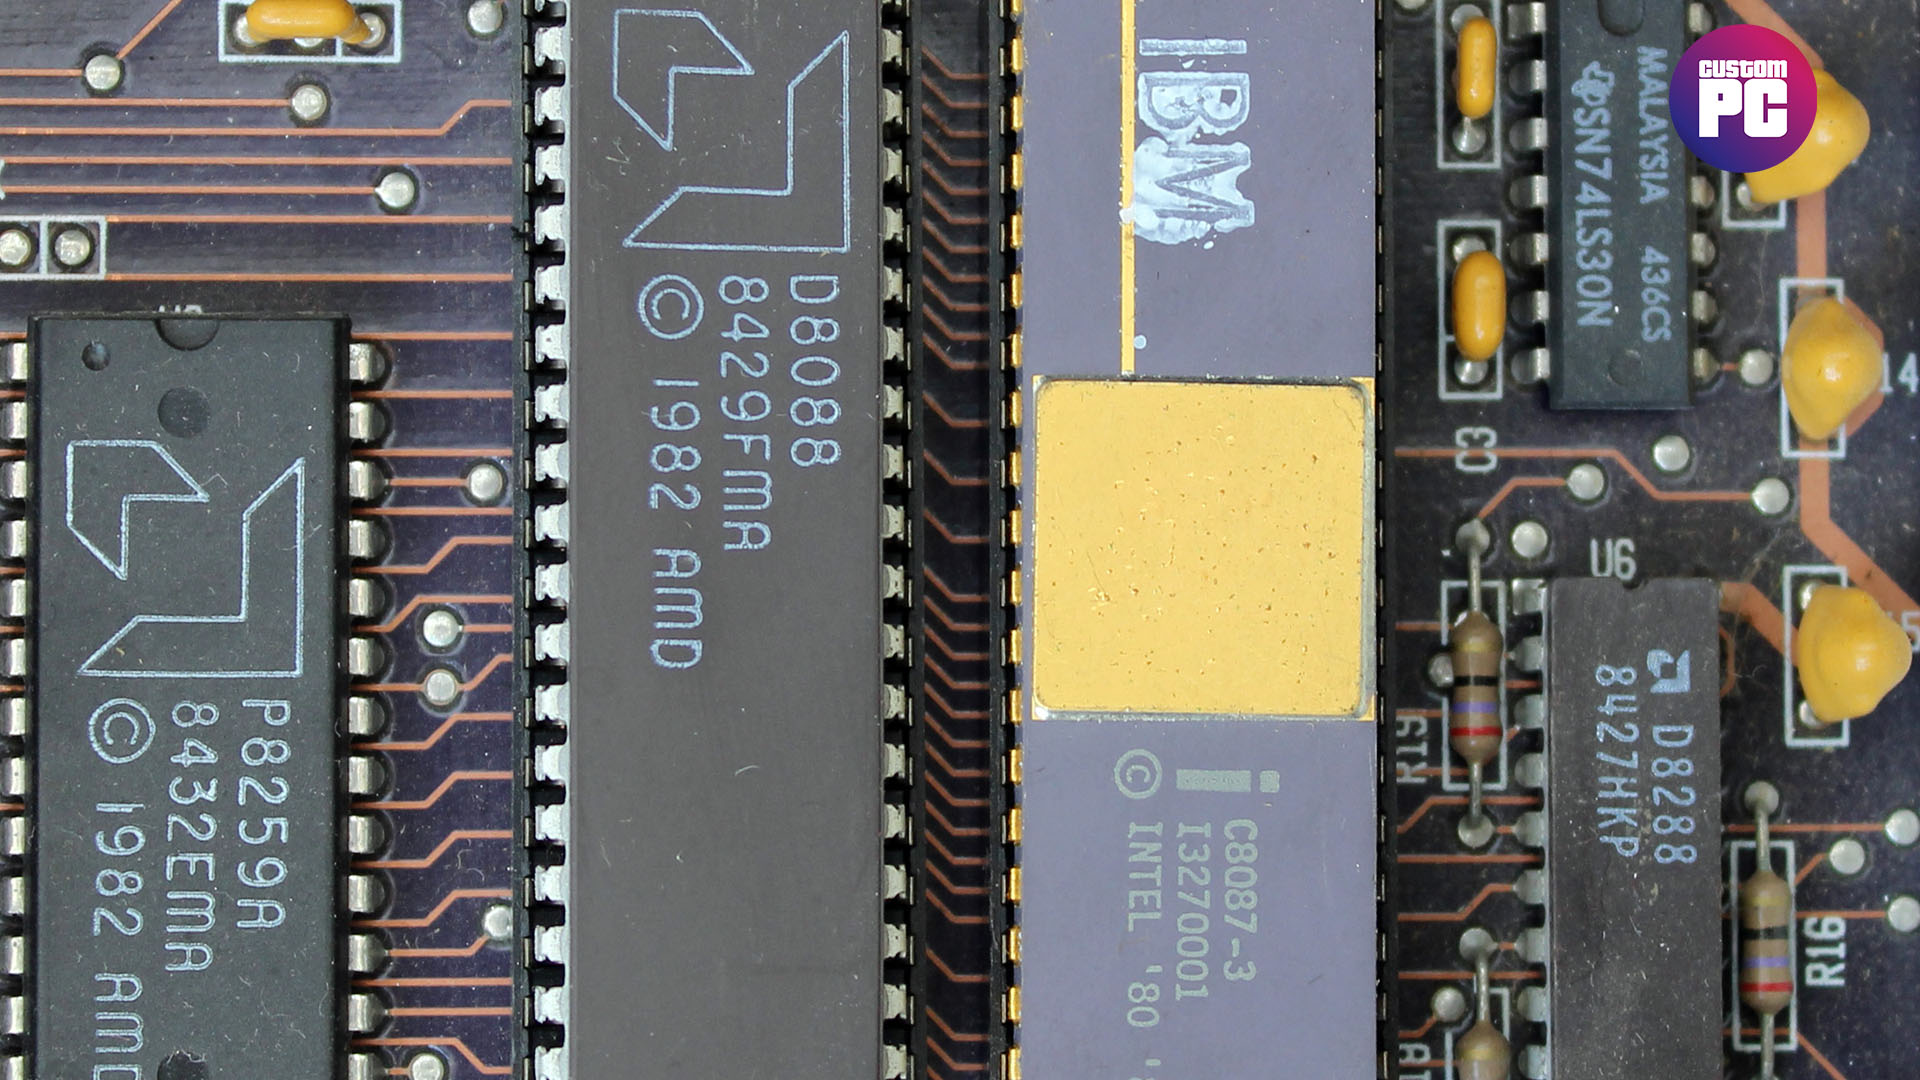 IBM PC 5150: AMD 8088 CPU and IBM 8087 coprocessor